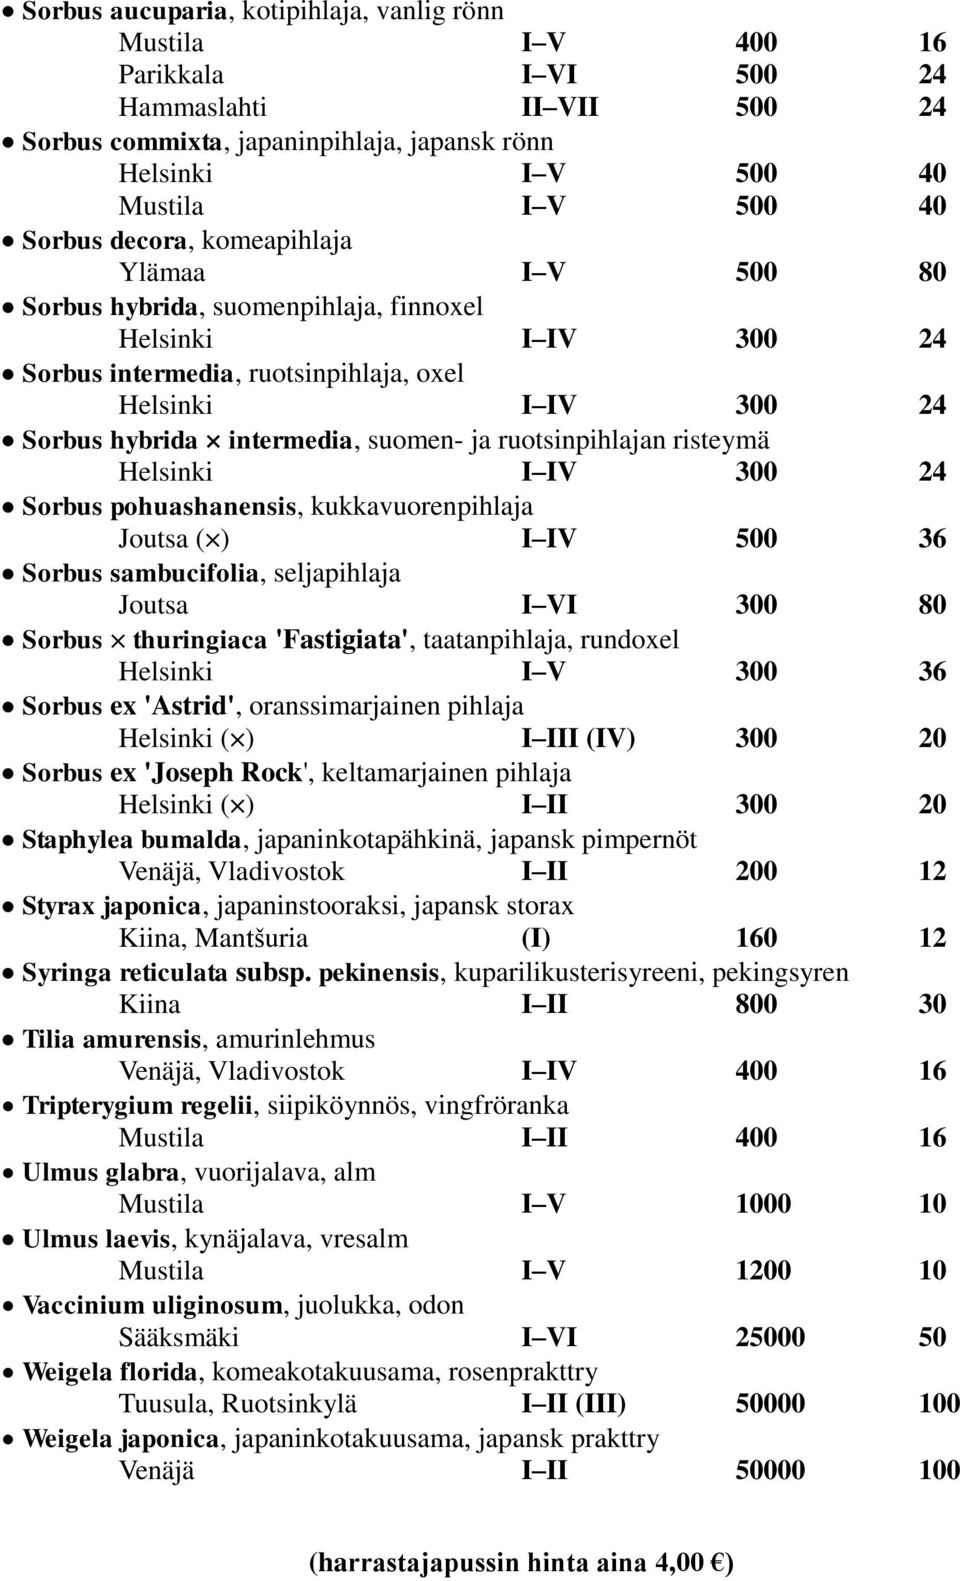 ruotsinpihlajan risteymä Helsinki I IV 300 24 Sorbus pohuashanensis, kukkavuorenpihlaja ( ) I IV 500 36 Sorbus sambucifolia, seljapihlaja I VI 300 80 Sorbus thuringiaca 'Fastigiata', taatanpihlaja,